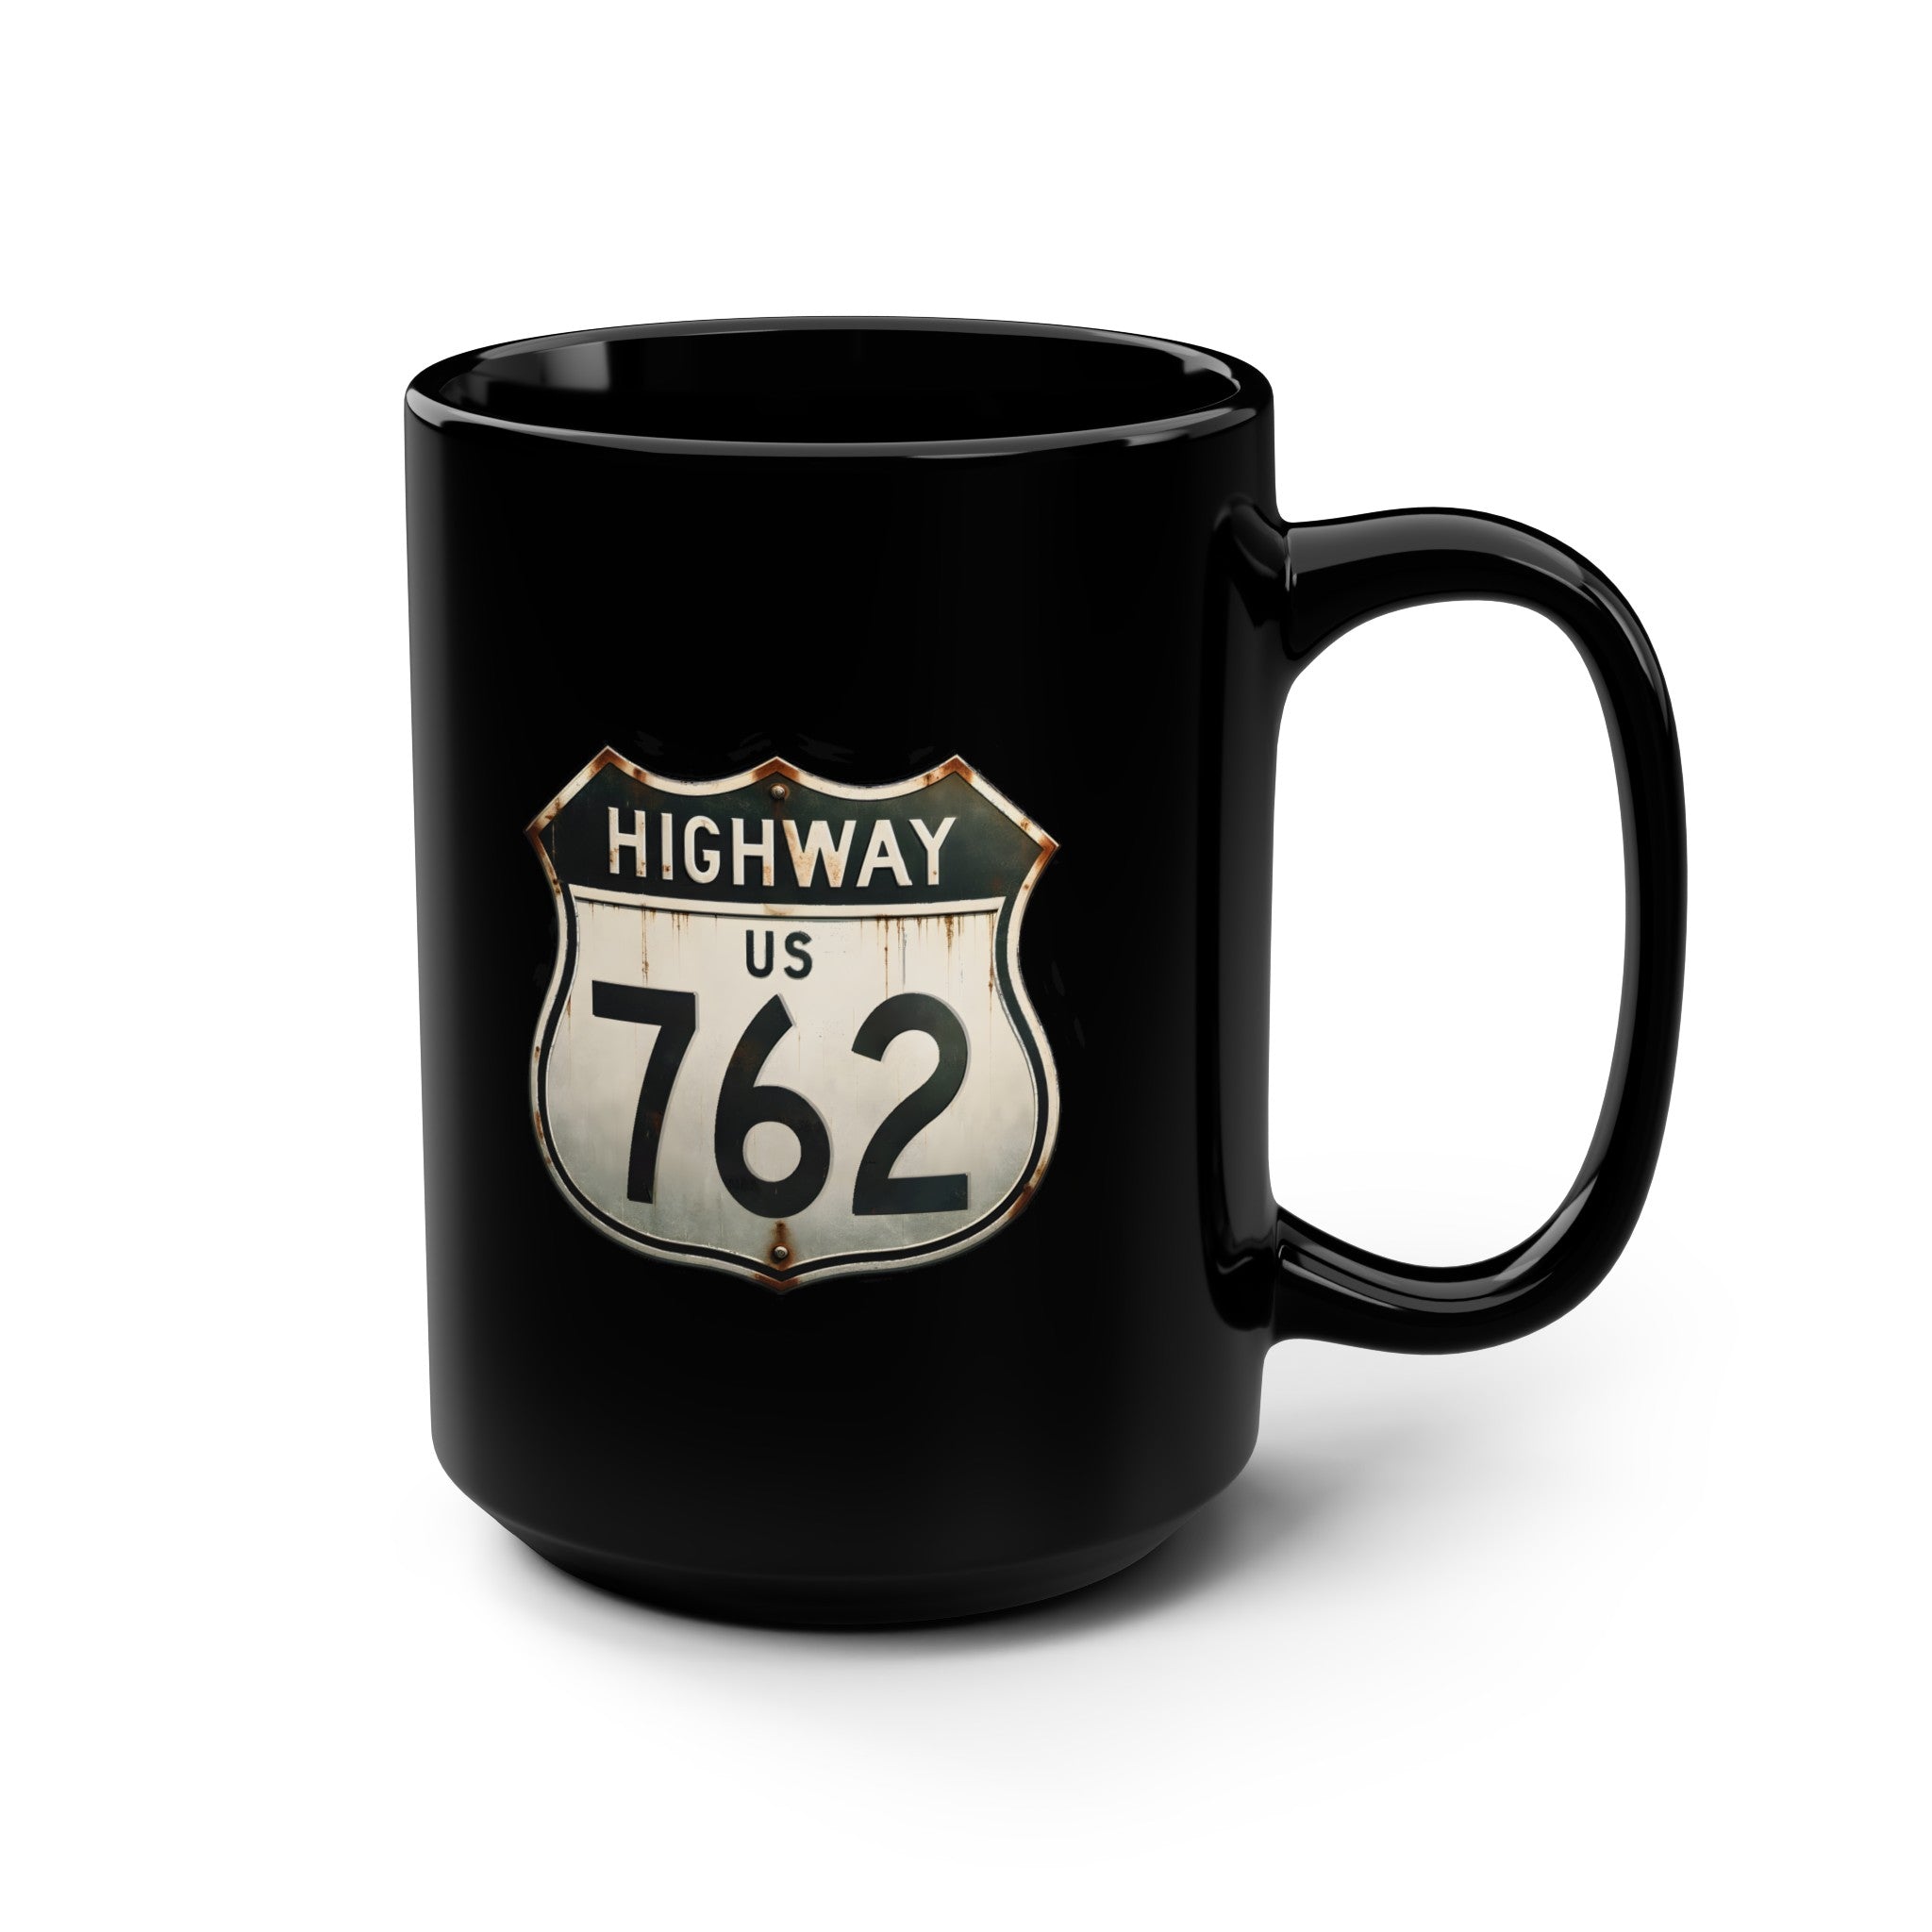 Highway 762 Black Mug, 15oz